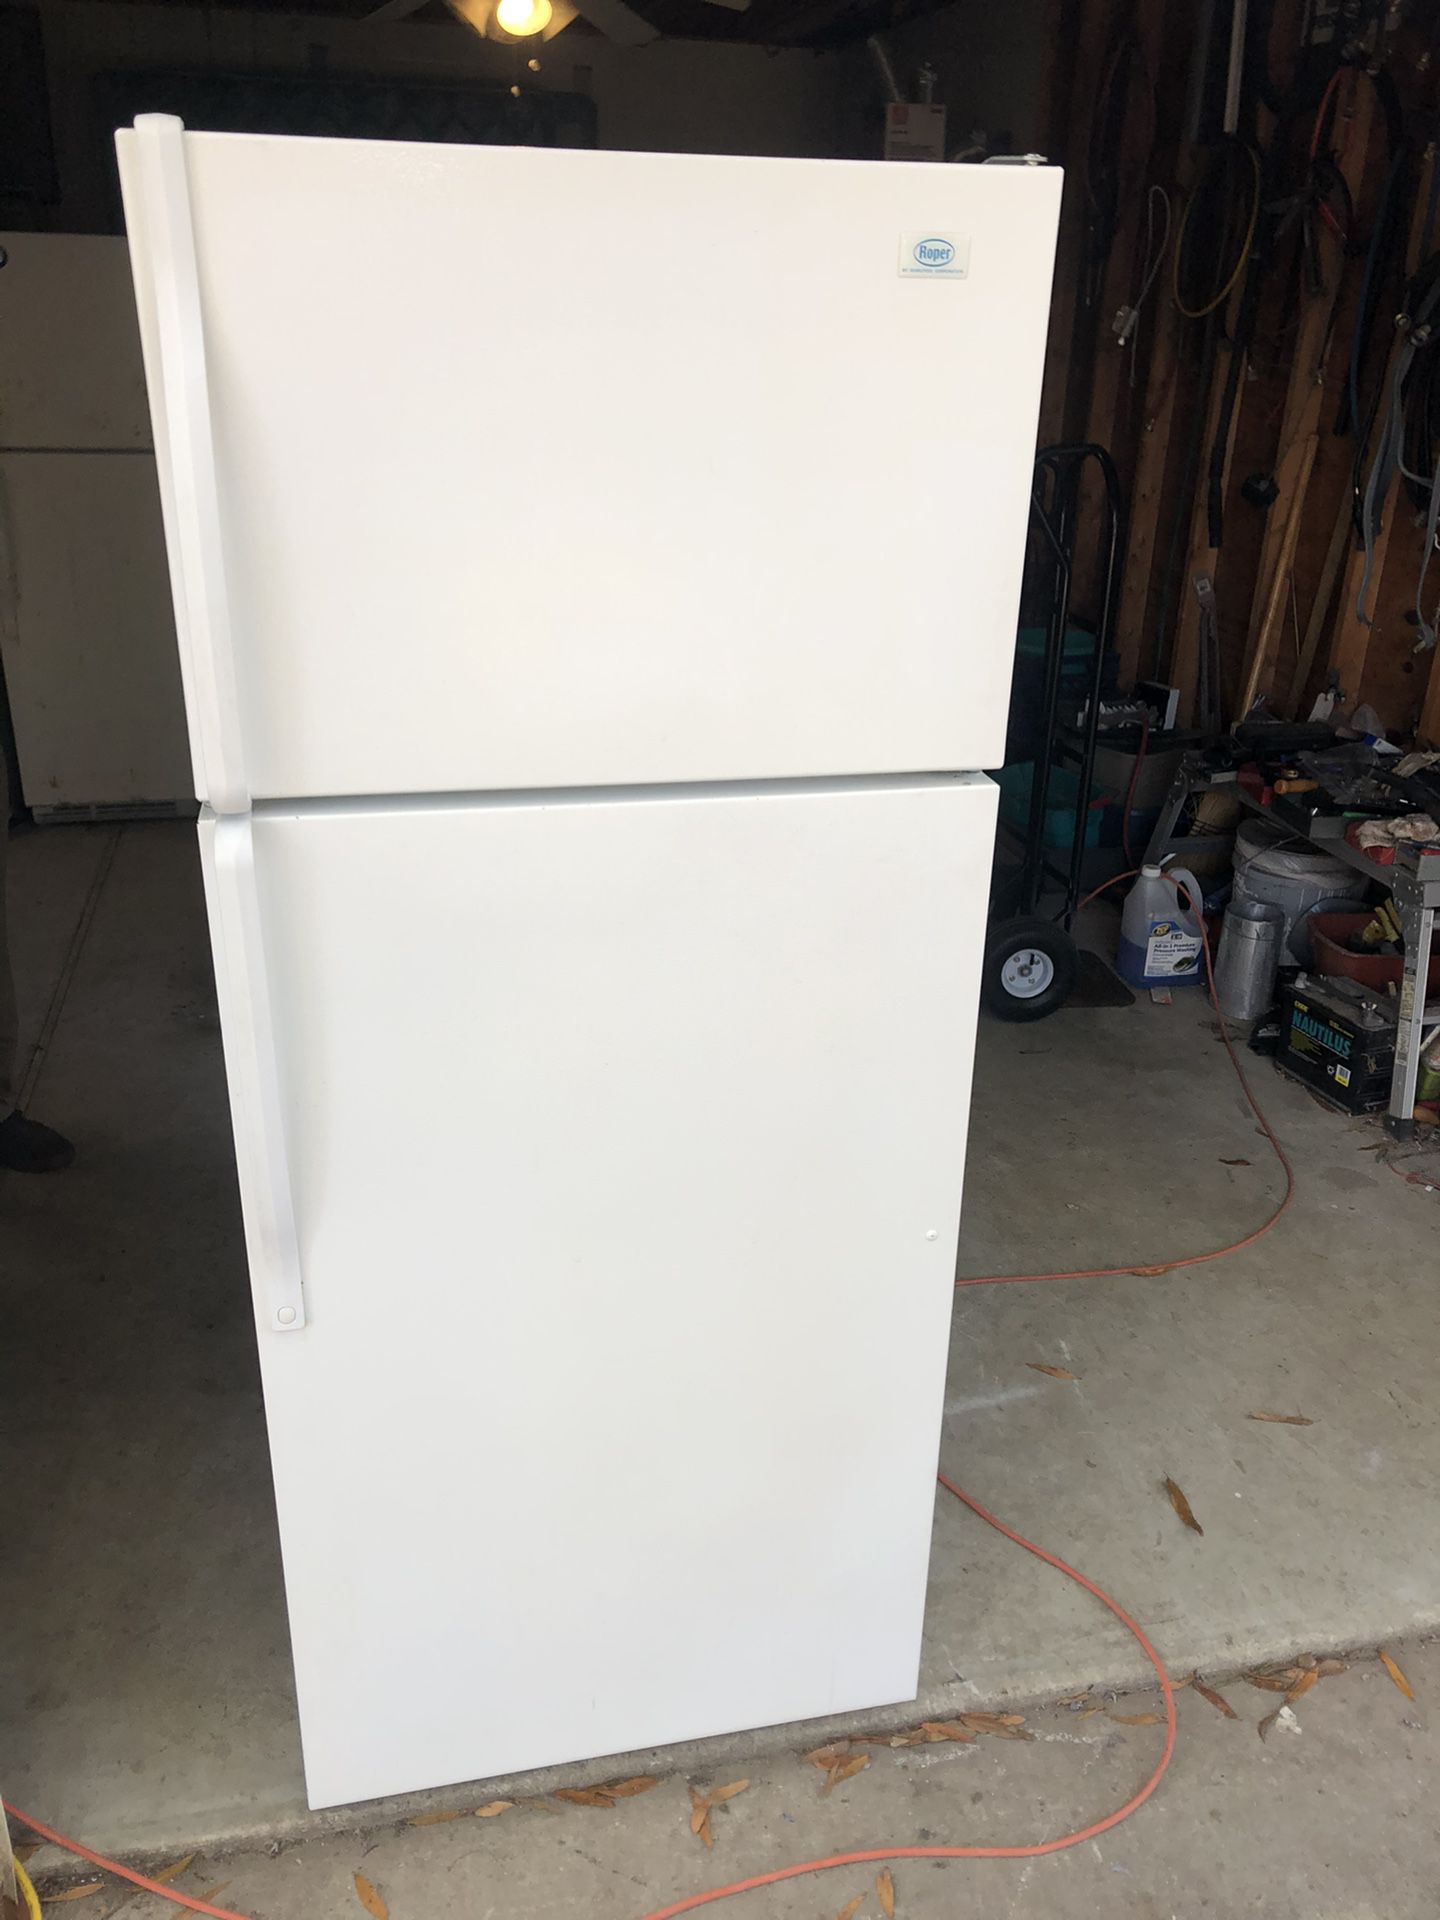 Cold refrigerator